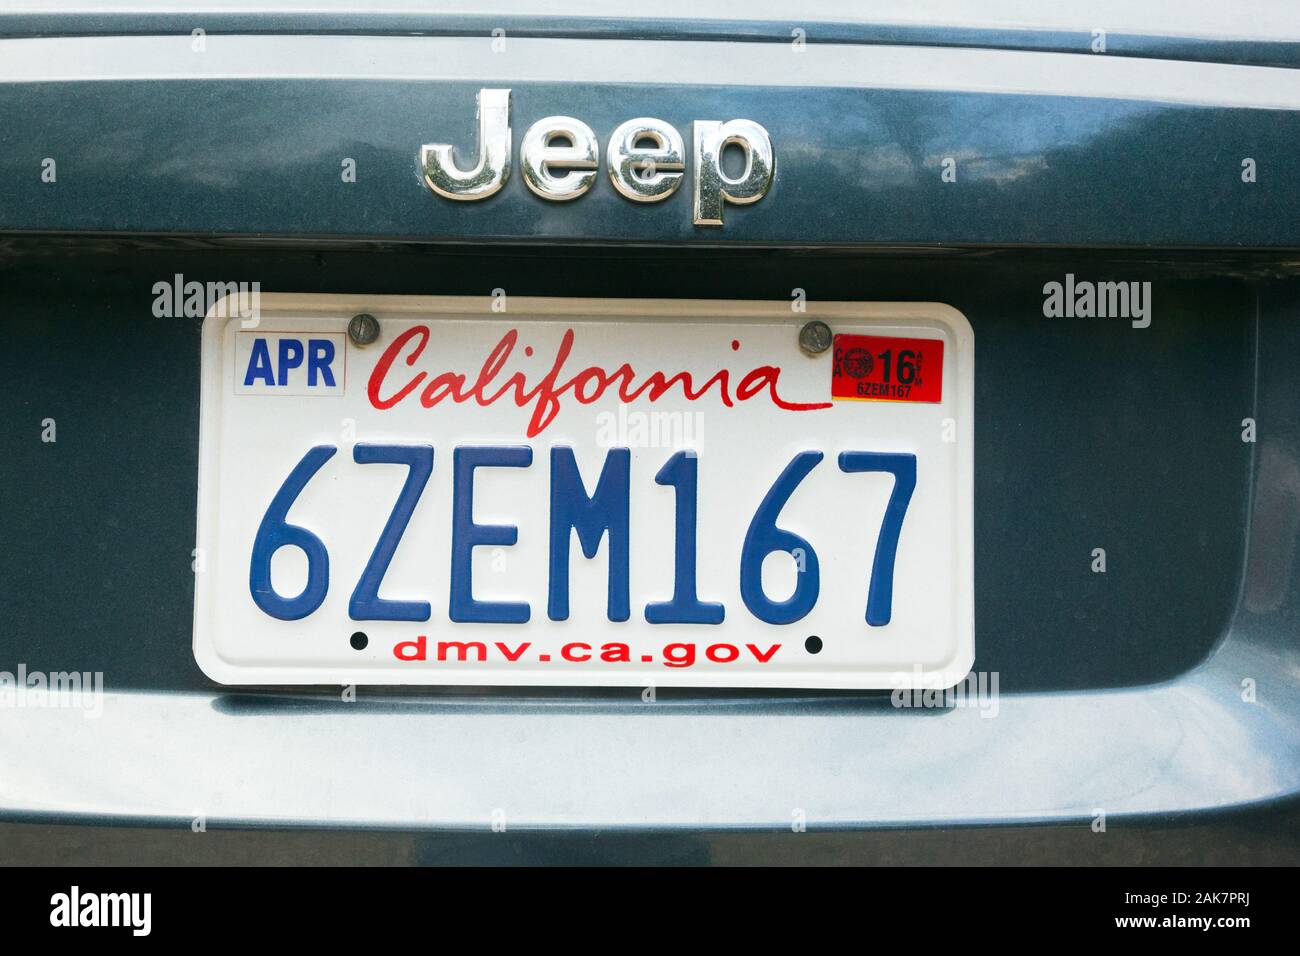 California car license plate on Jeep car Stock Photo